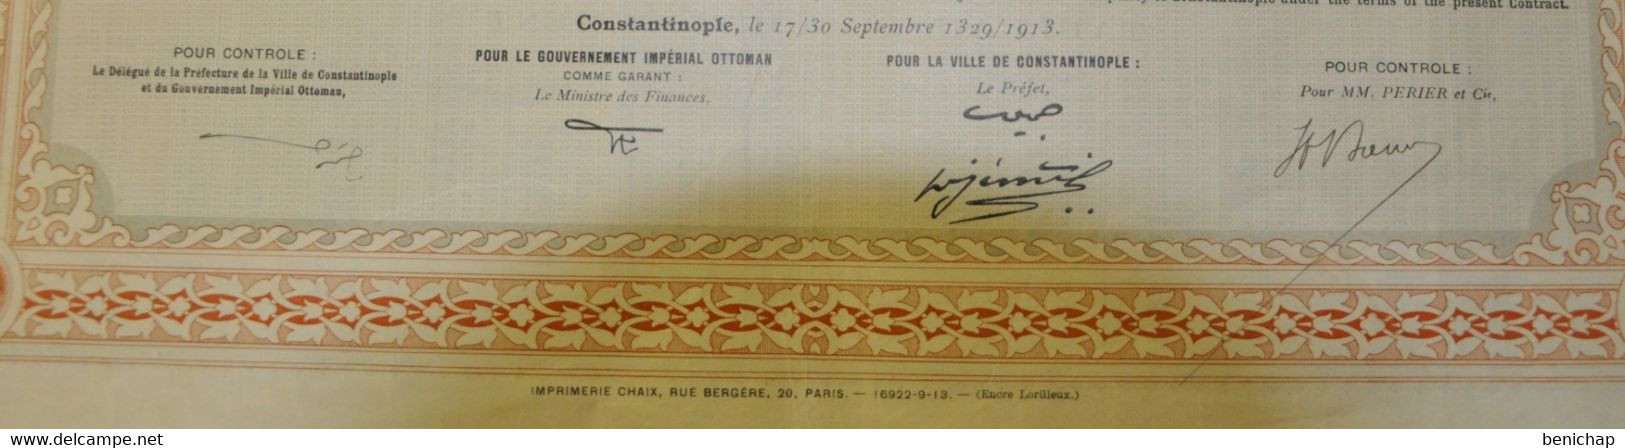 Ville De Constantinople - Emprunt Municipal 5% 1913 - Obligation De 500F. - Bank & Insurance